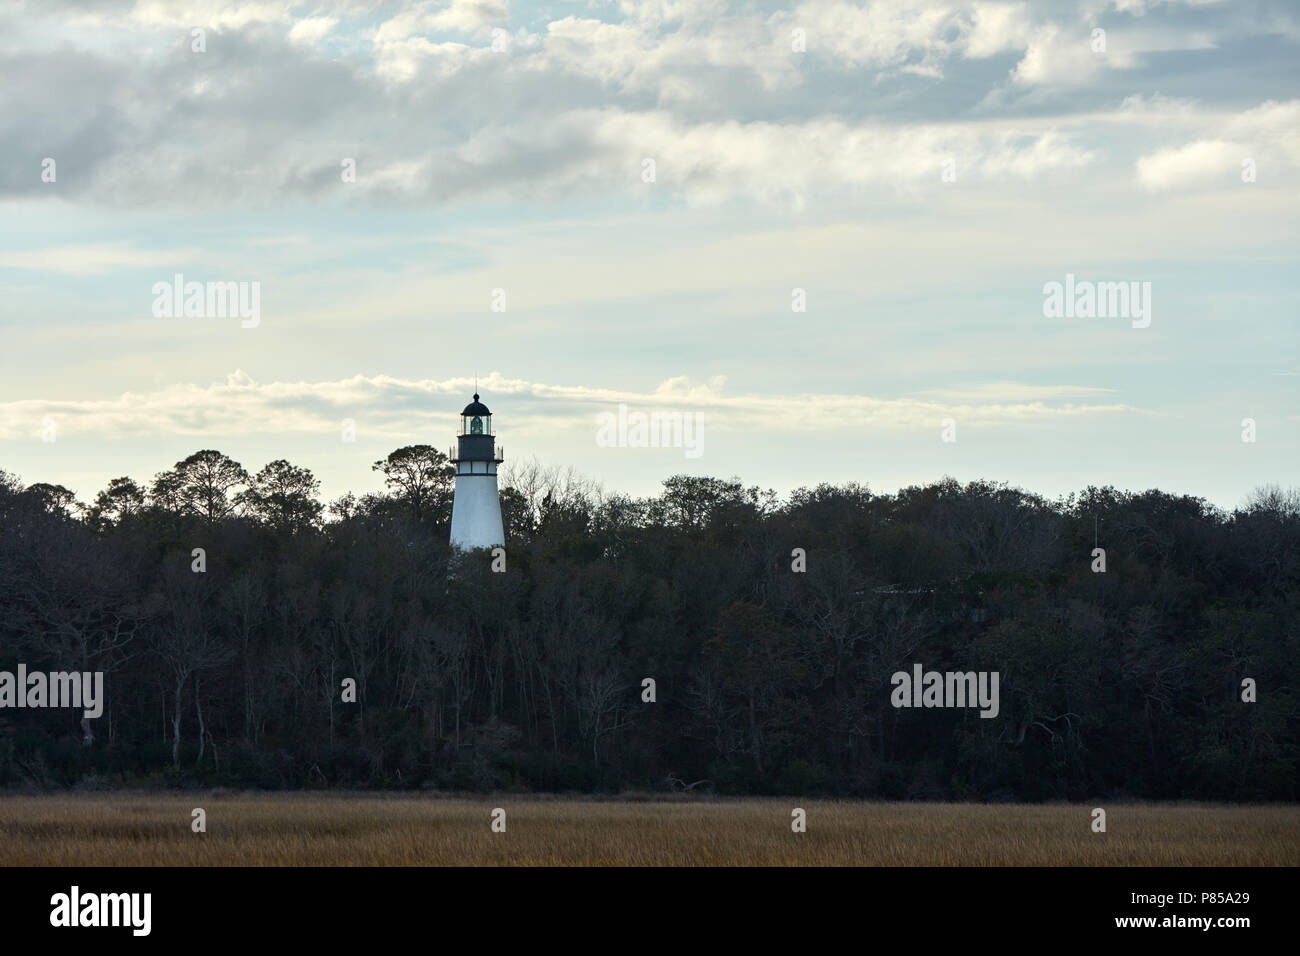 Amelia Island lighthouse protruding above the trees Stock Photo